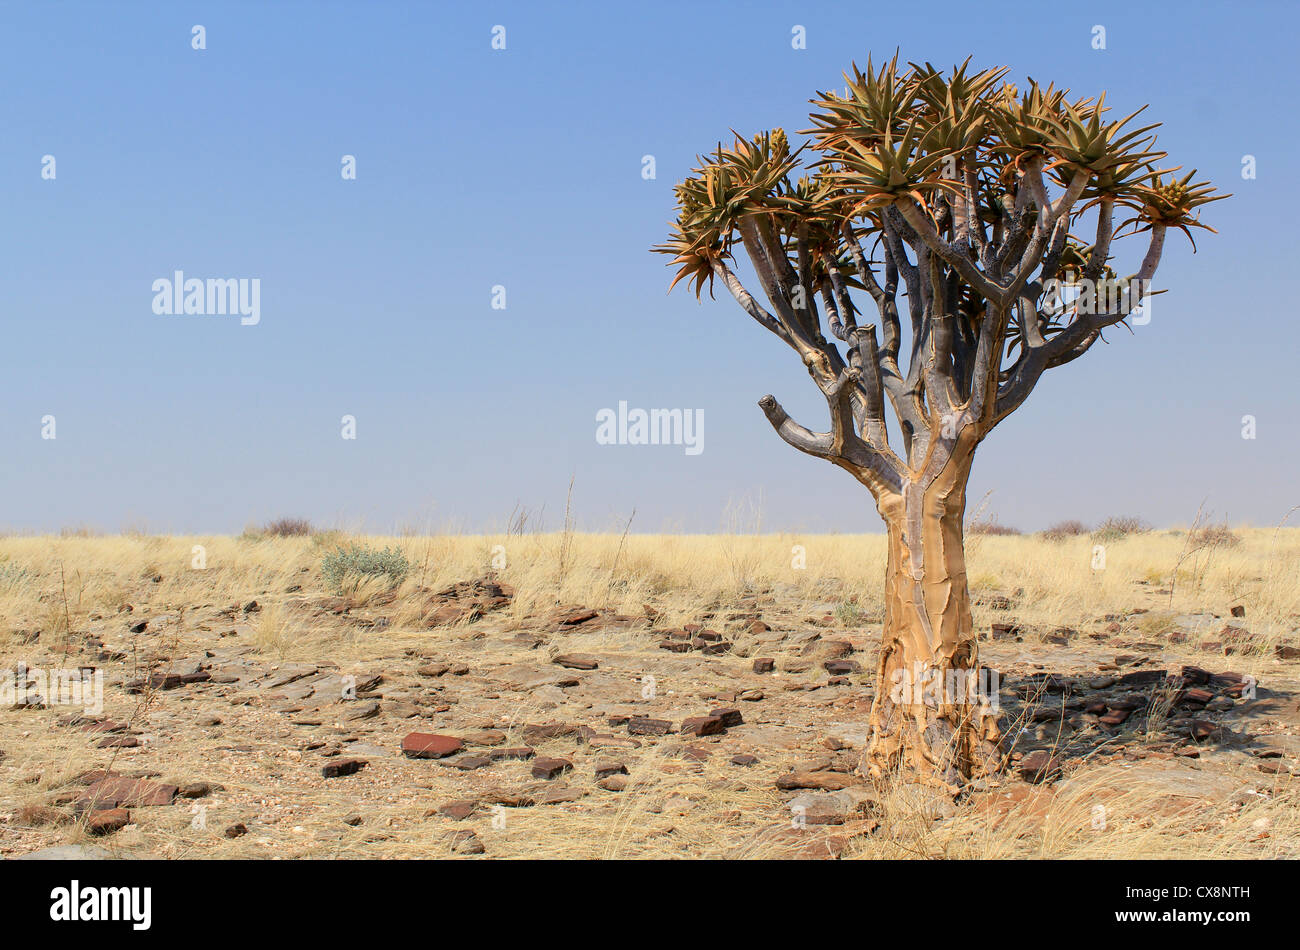 Quiver tree (Aloe dichotoma) in the Namib desert landscape. Namibia Stock Photo